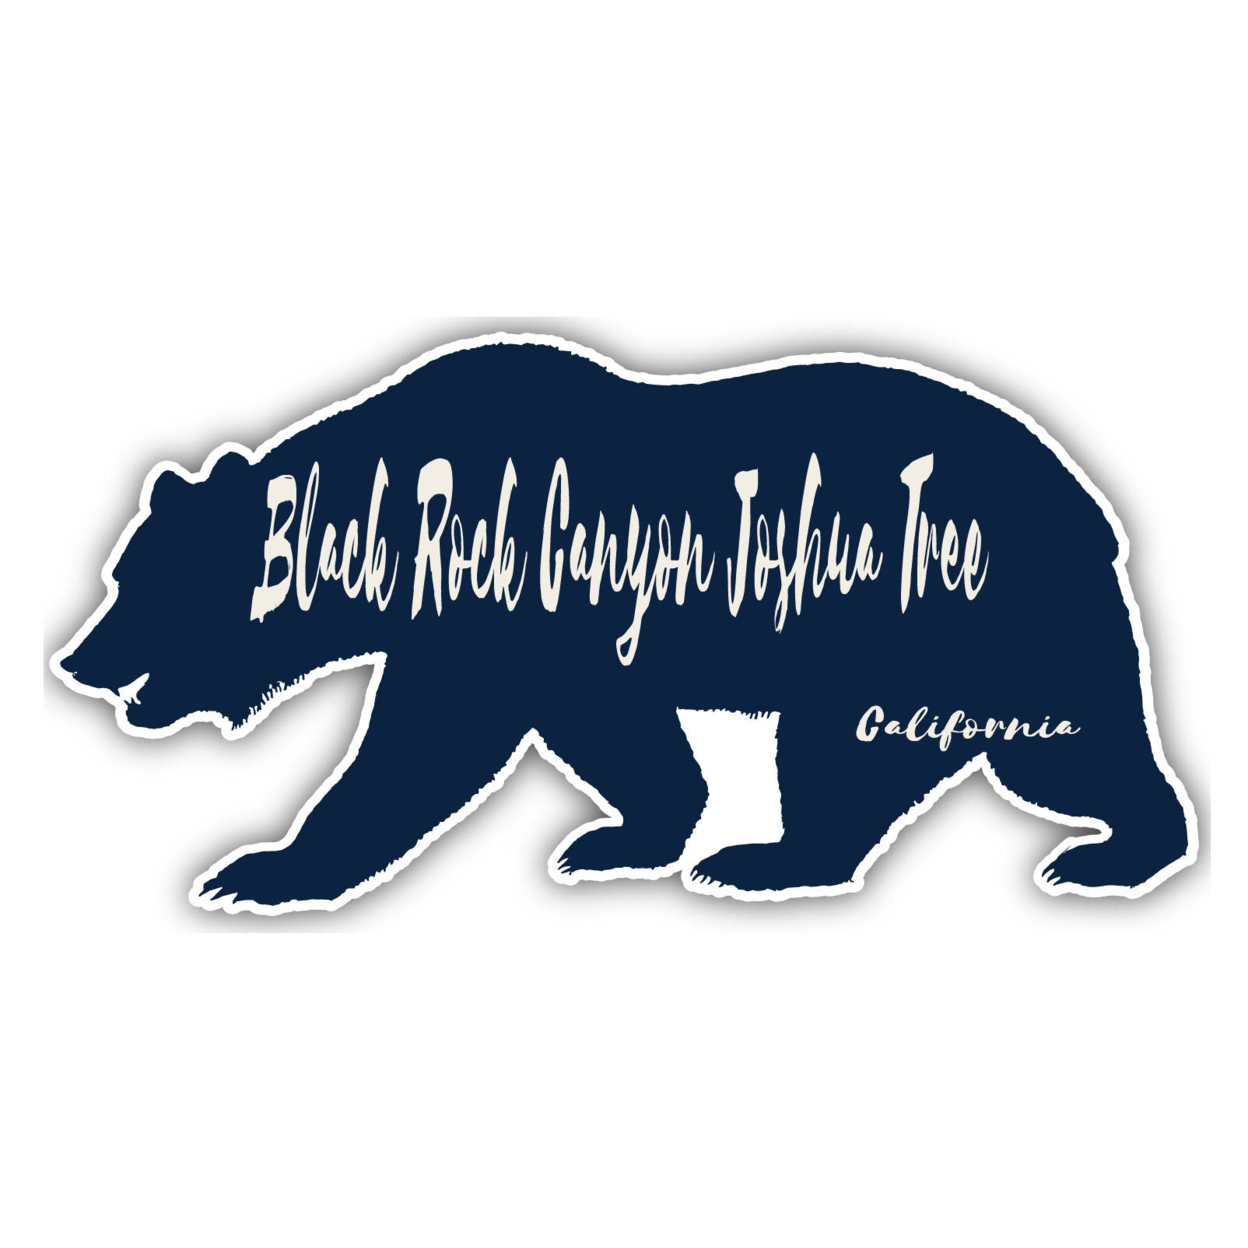 Black Rock Canyon Joshua Tree California Souvenir Decorative Stickers (Choose Theme And Size) - Single Unit, 10-Inch, Bear